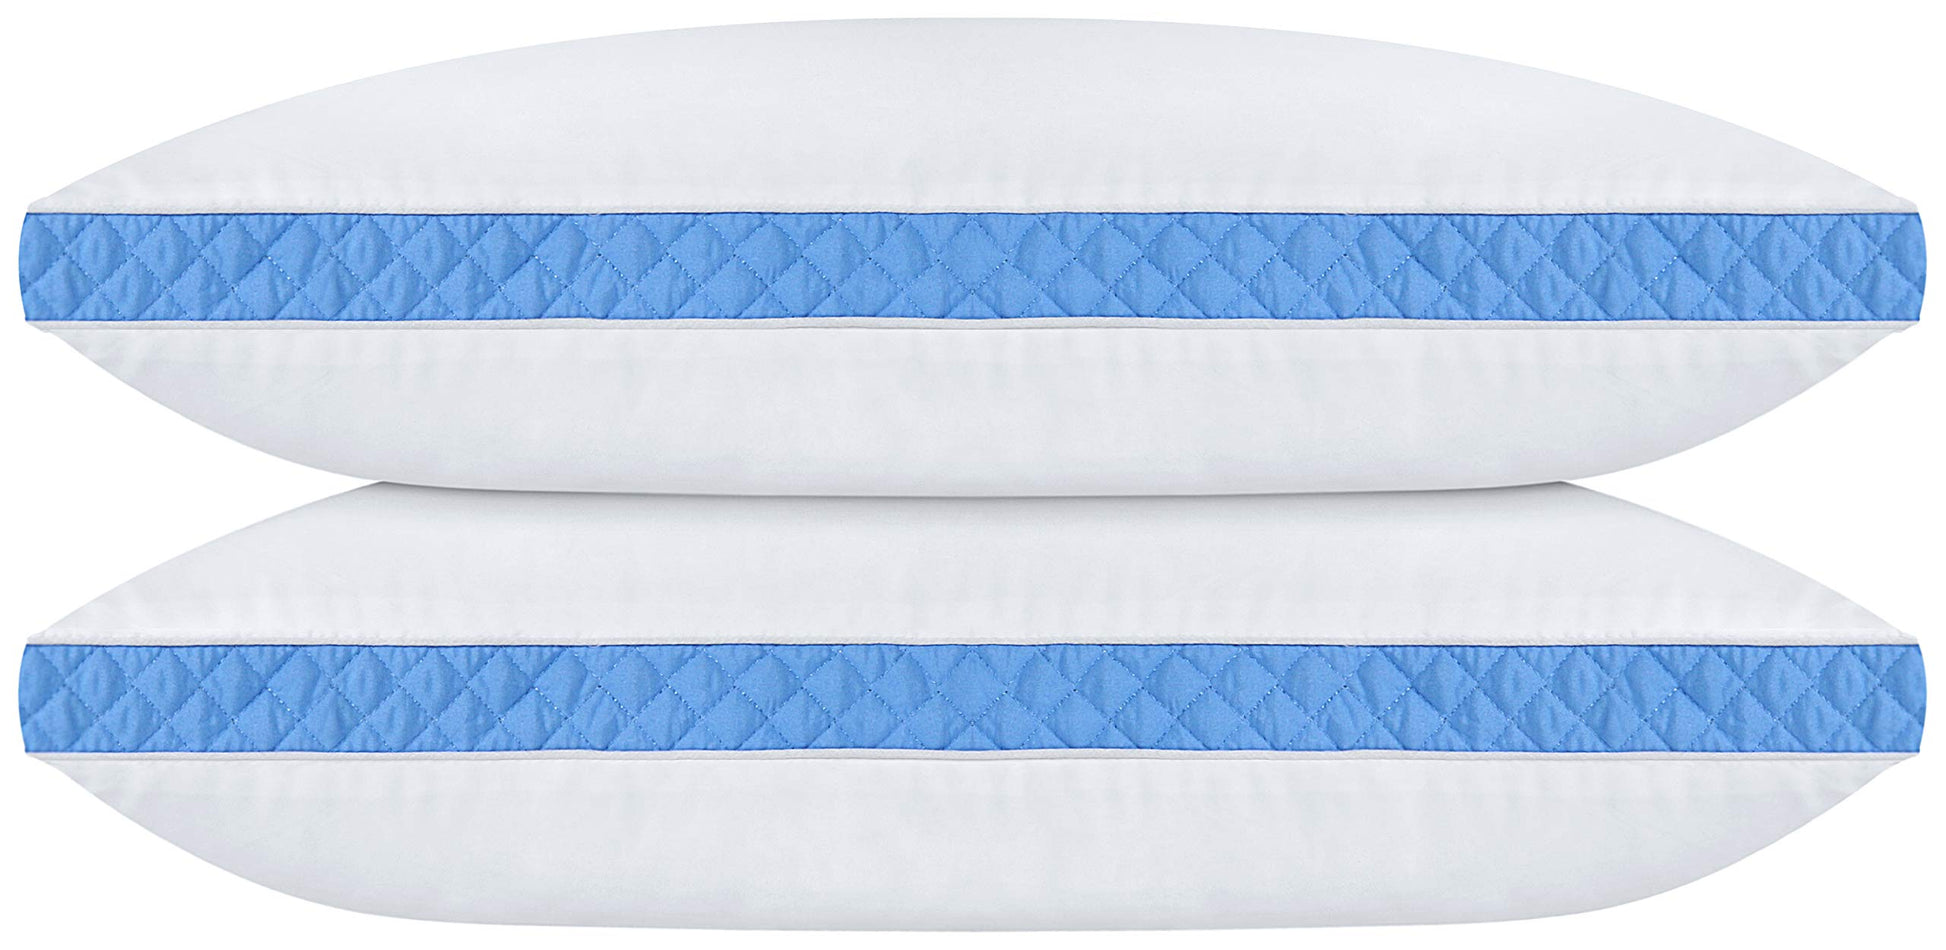 Utopia Bedding Gusset Pillows 2PK Blue and Bed Pillows 2PK White (Queen)